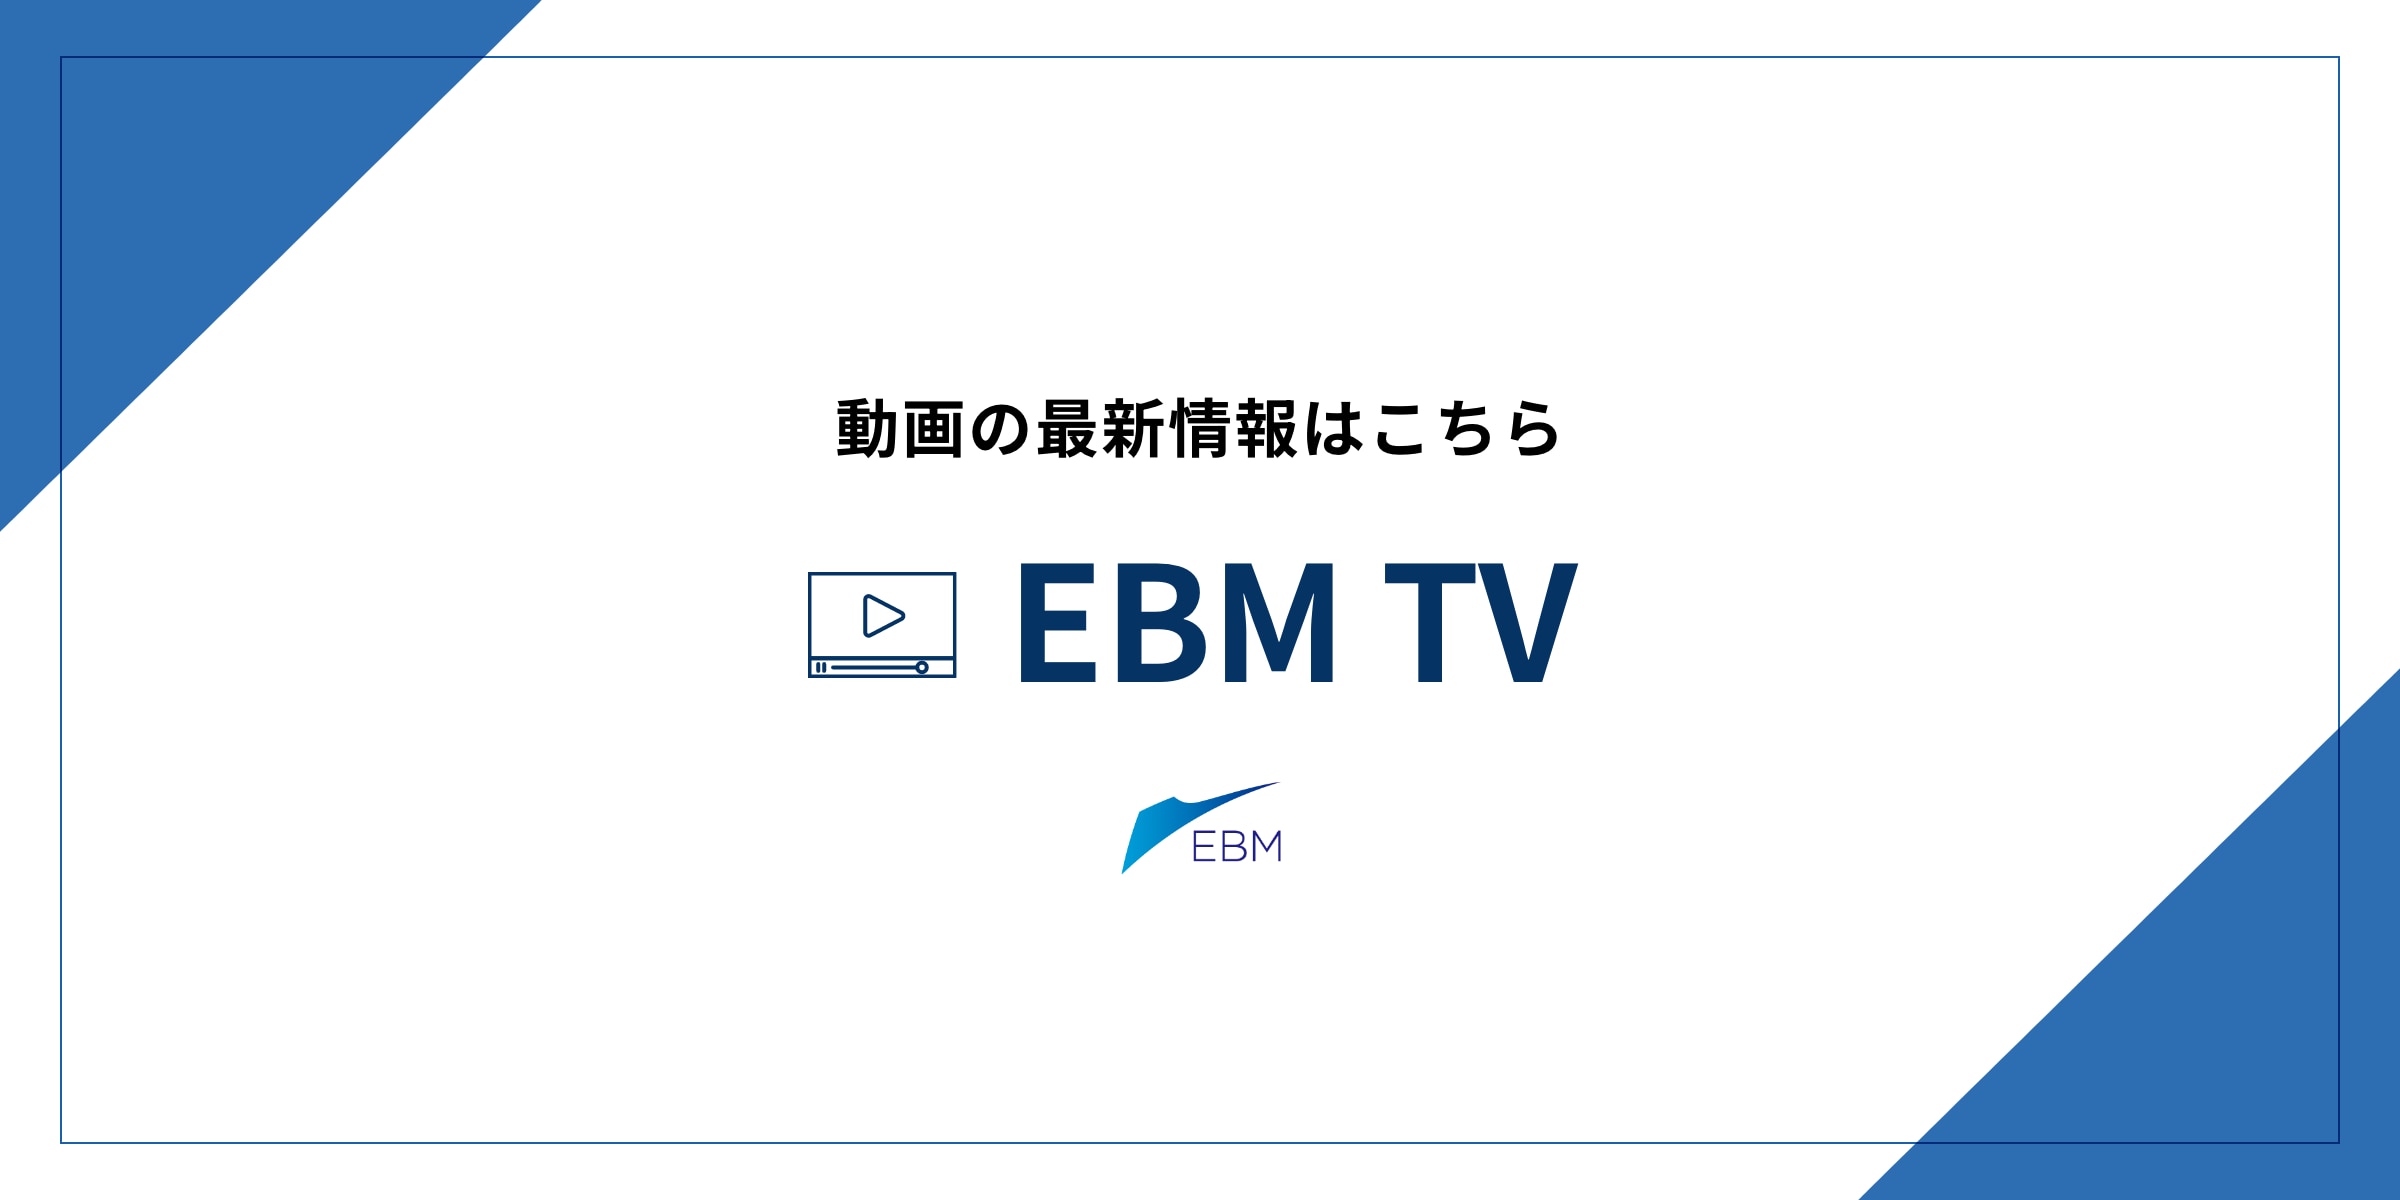 Learn about EBM TV through videos